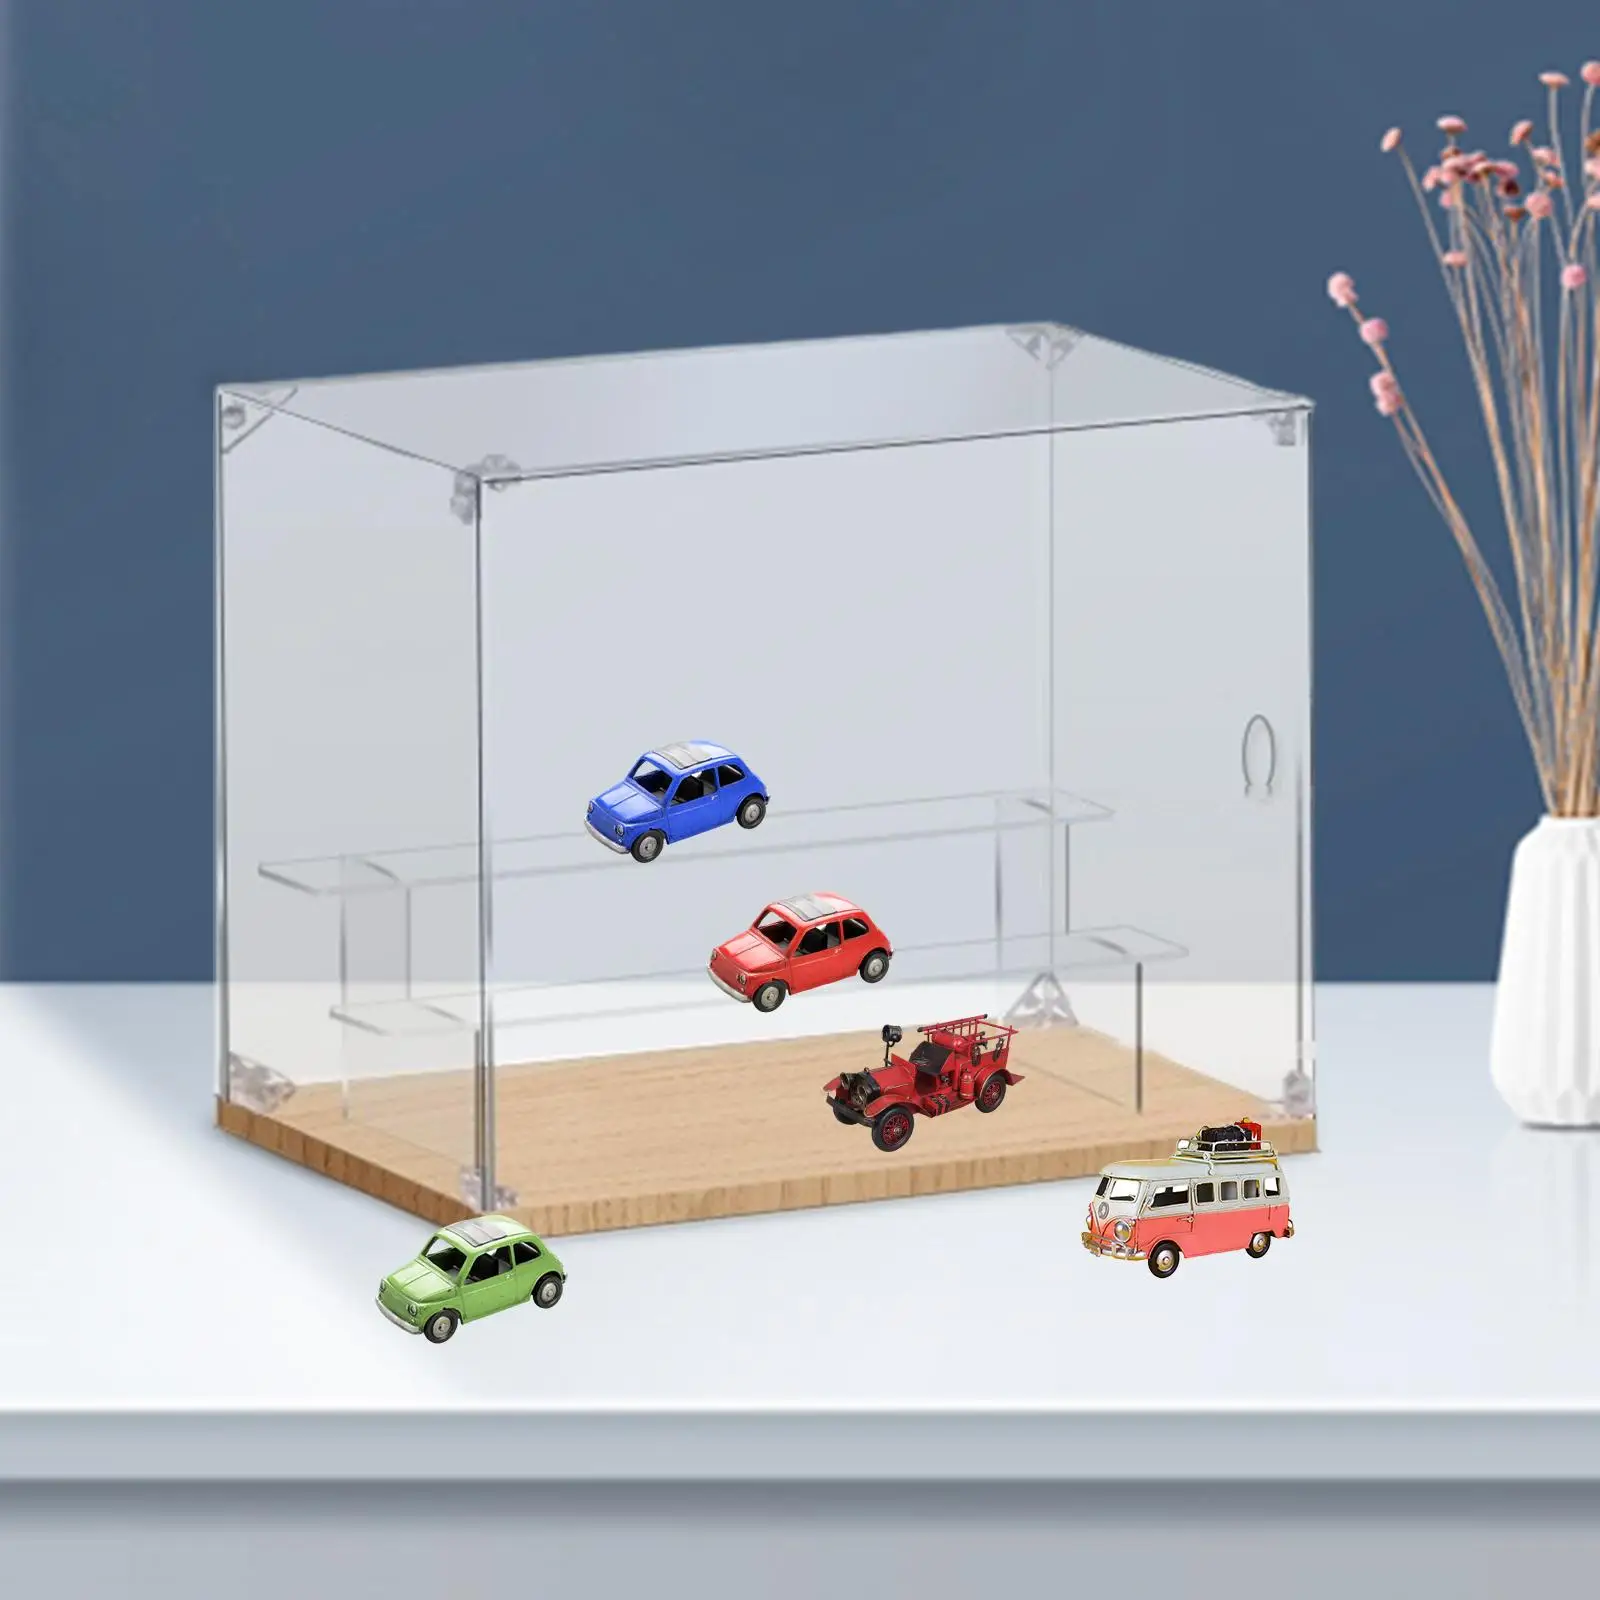 Transparent Acrylic Display Case Ladder  Container  Case Organizer Holder Riser Shelf for Figure Model Car Home Desktop